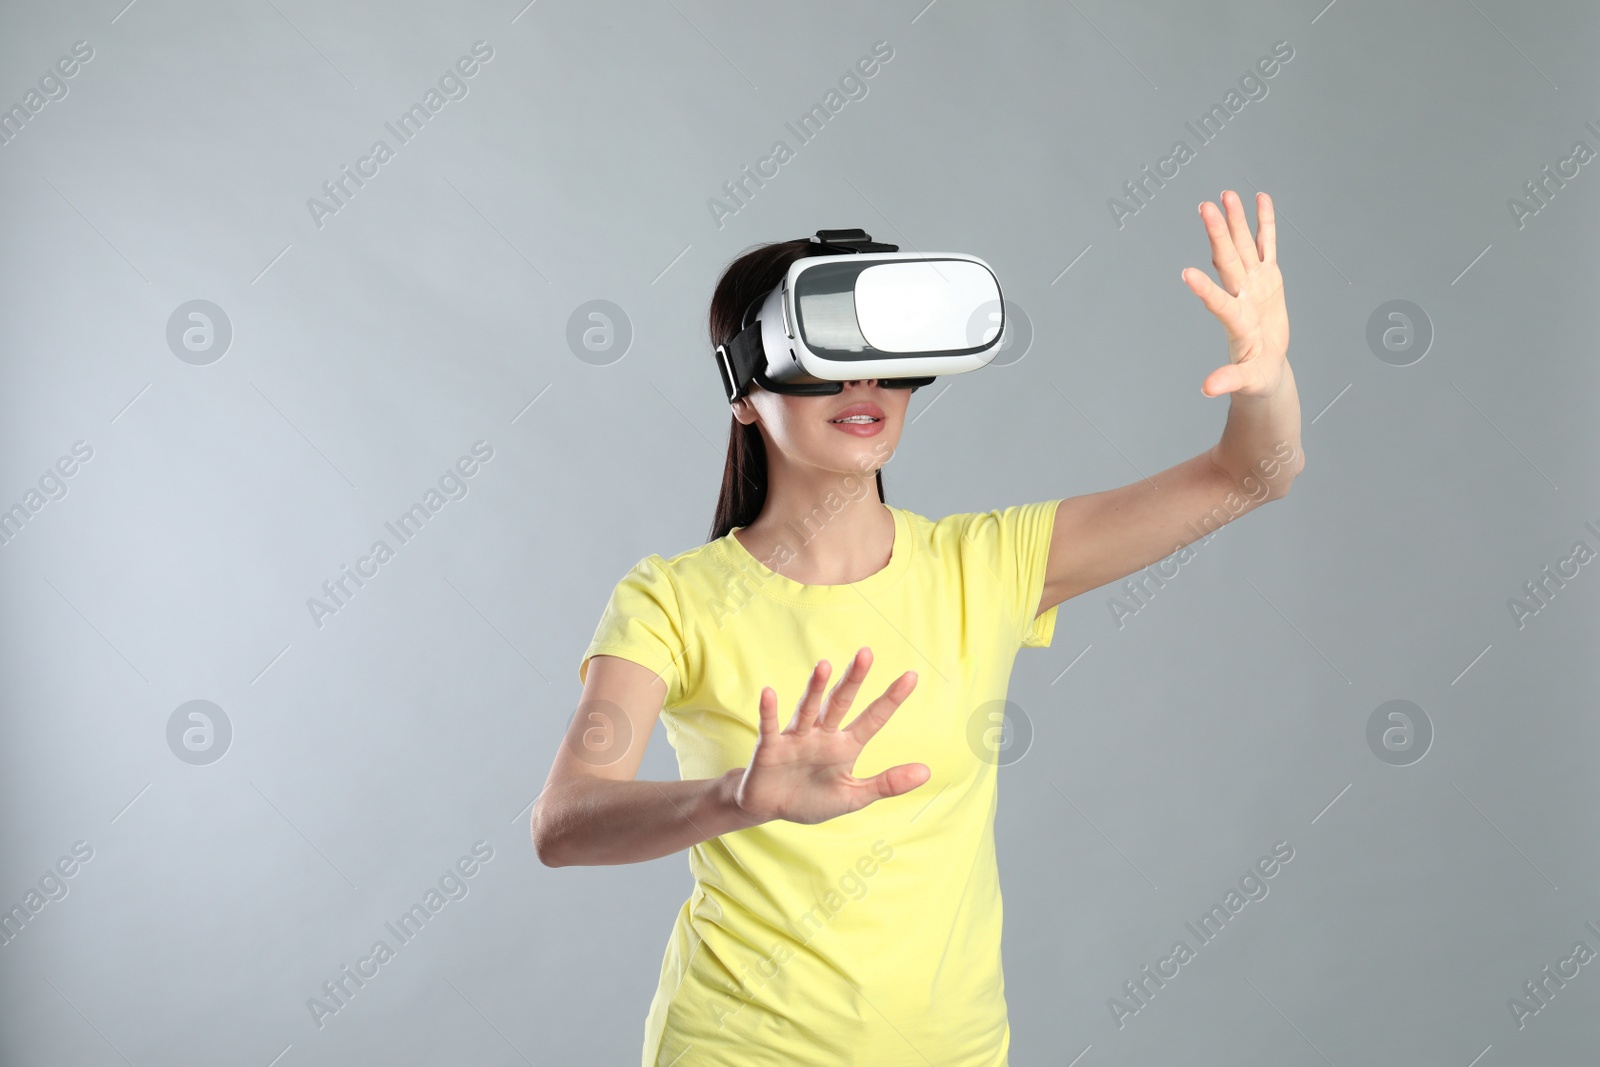 Photo of Woman using virtual reality headset on grey background